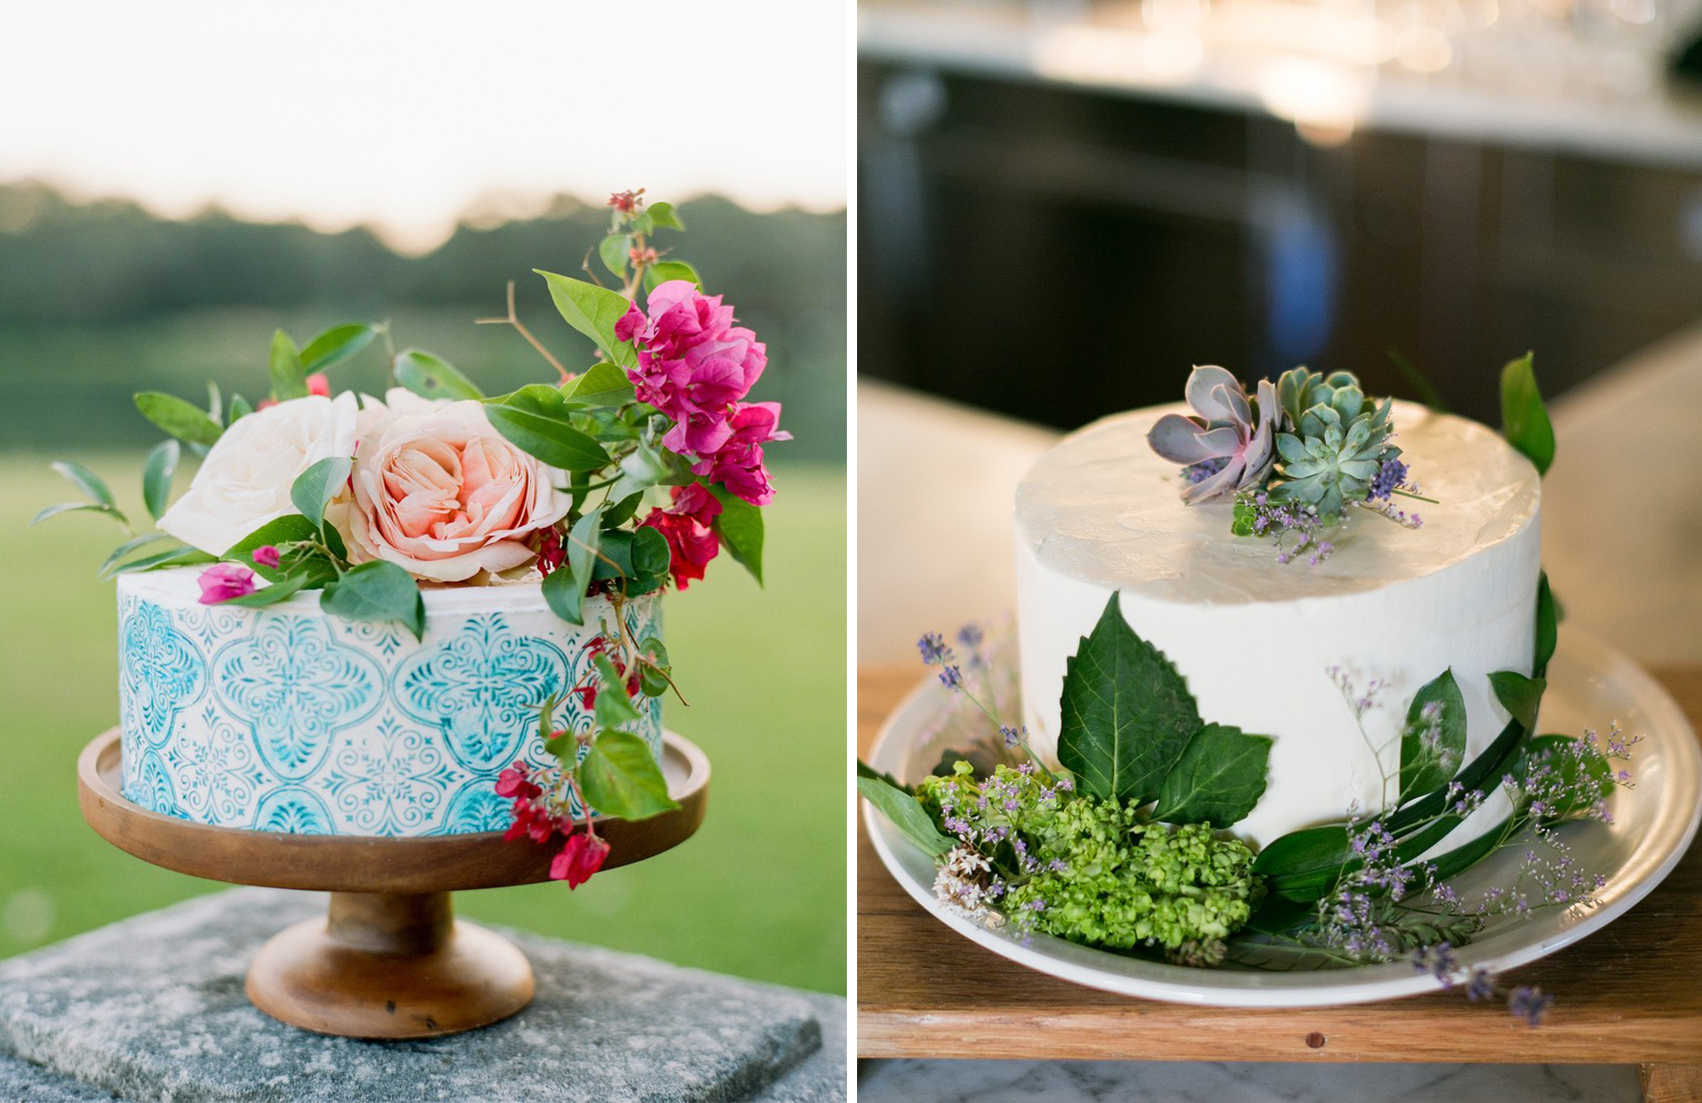 One-tier wedding cake